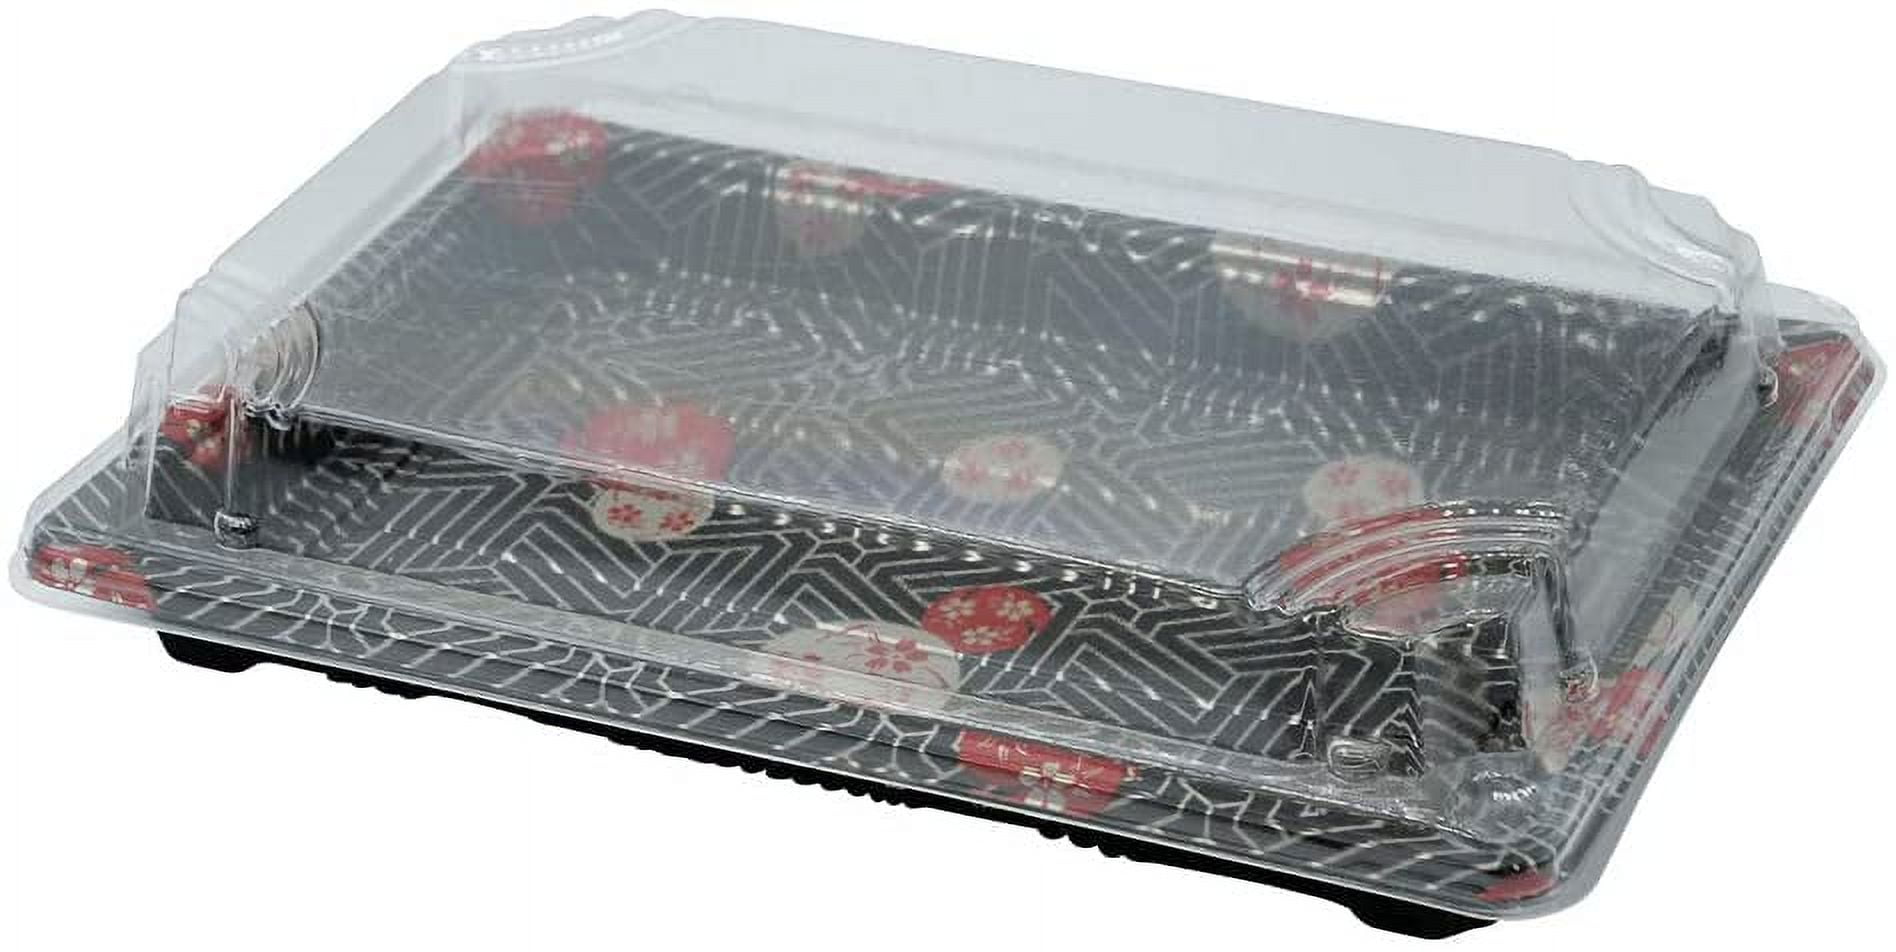 Pulp Tek Rectangle Clear Plastic Lid - Fits Medium Sushi Tray - 7 1/4 x 5  x 1 1/4 - 100 count box